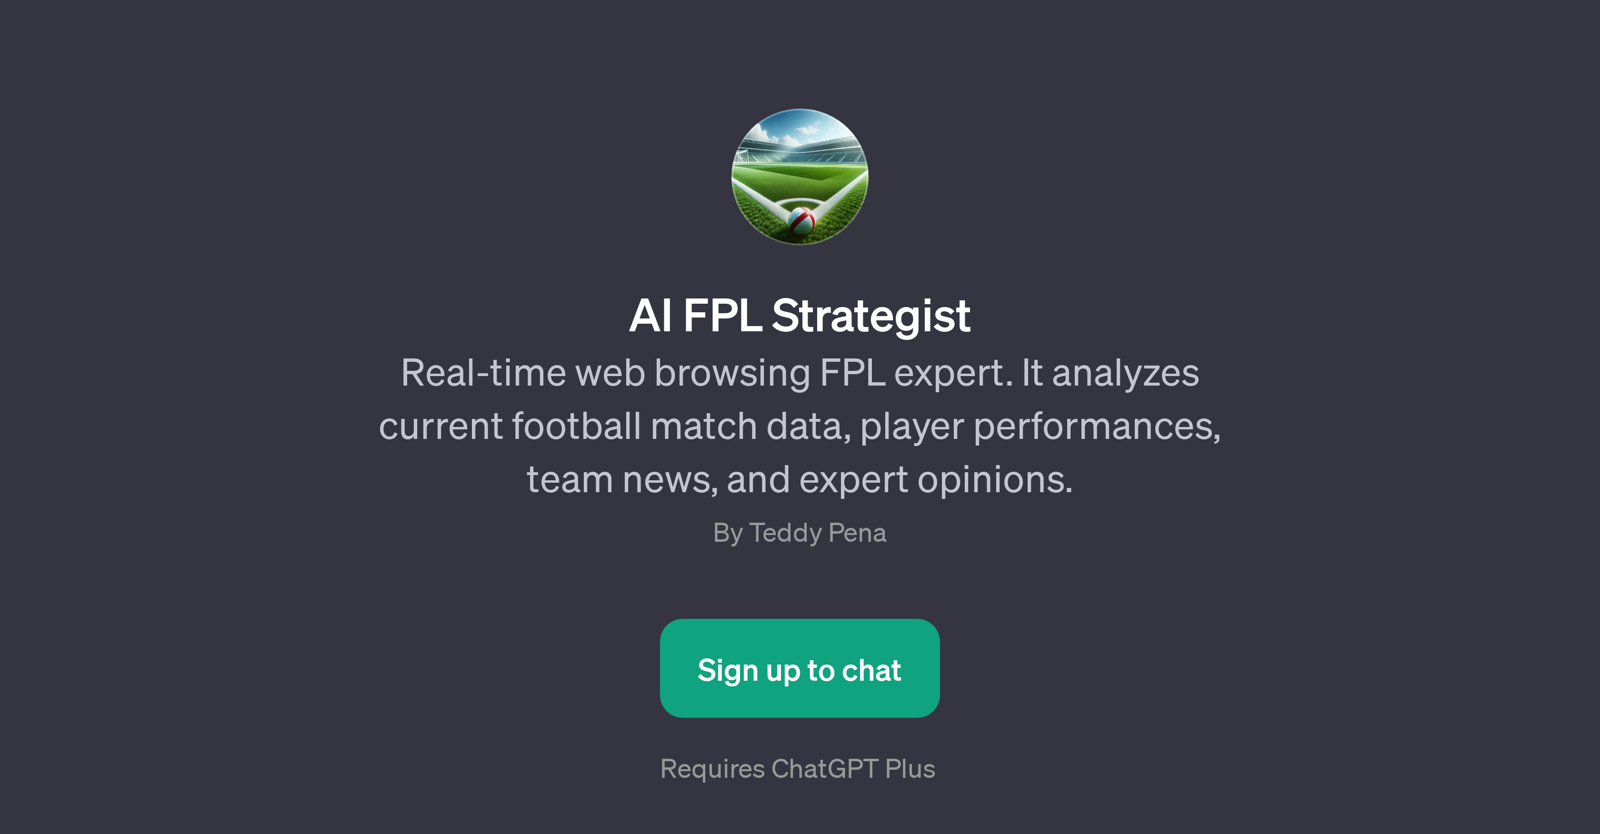 AI FPL Strategist website